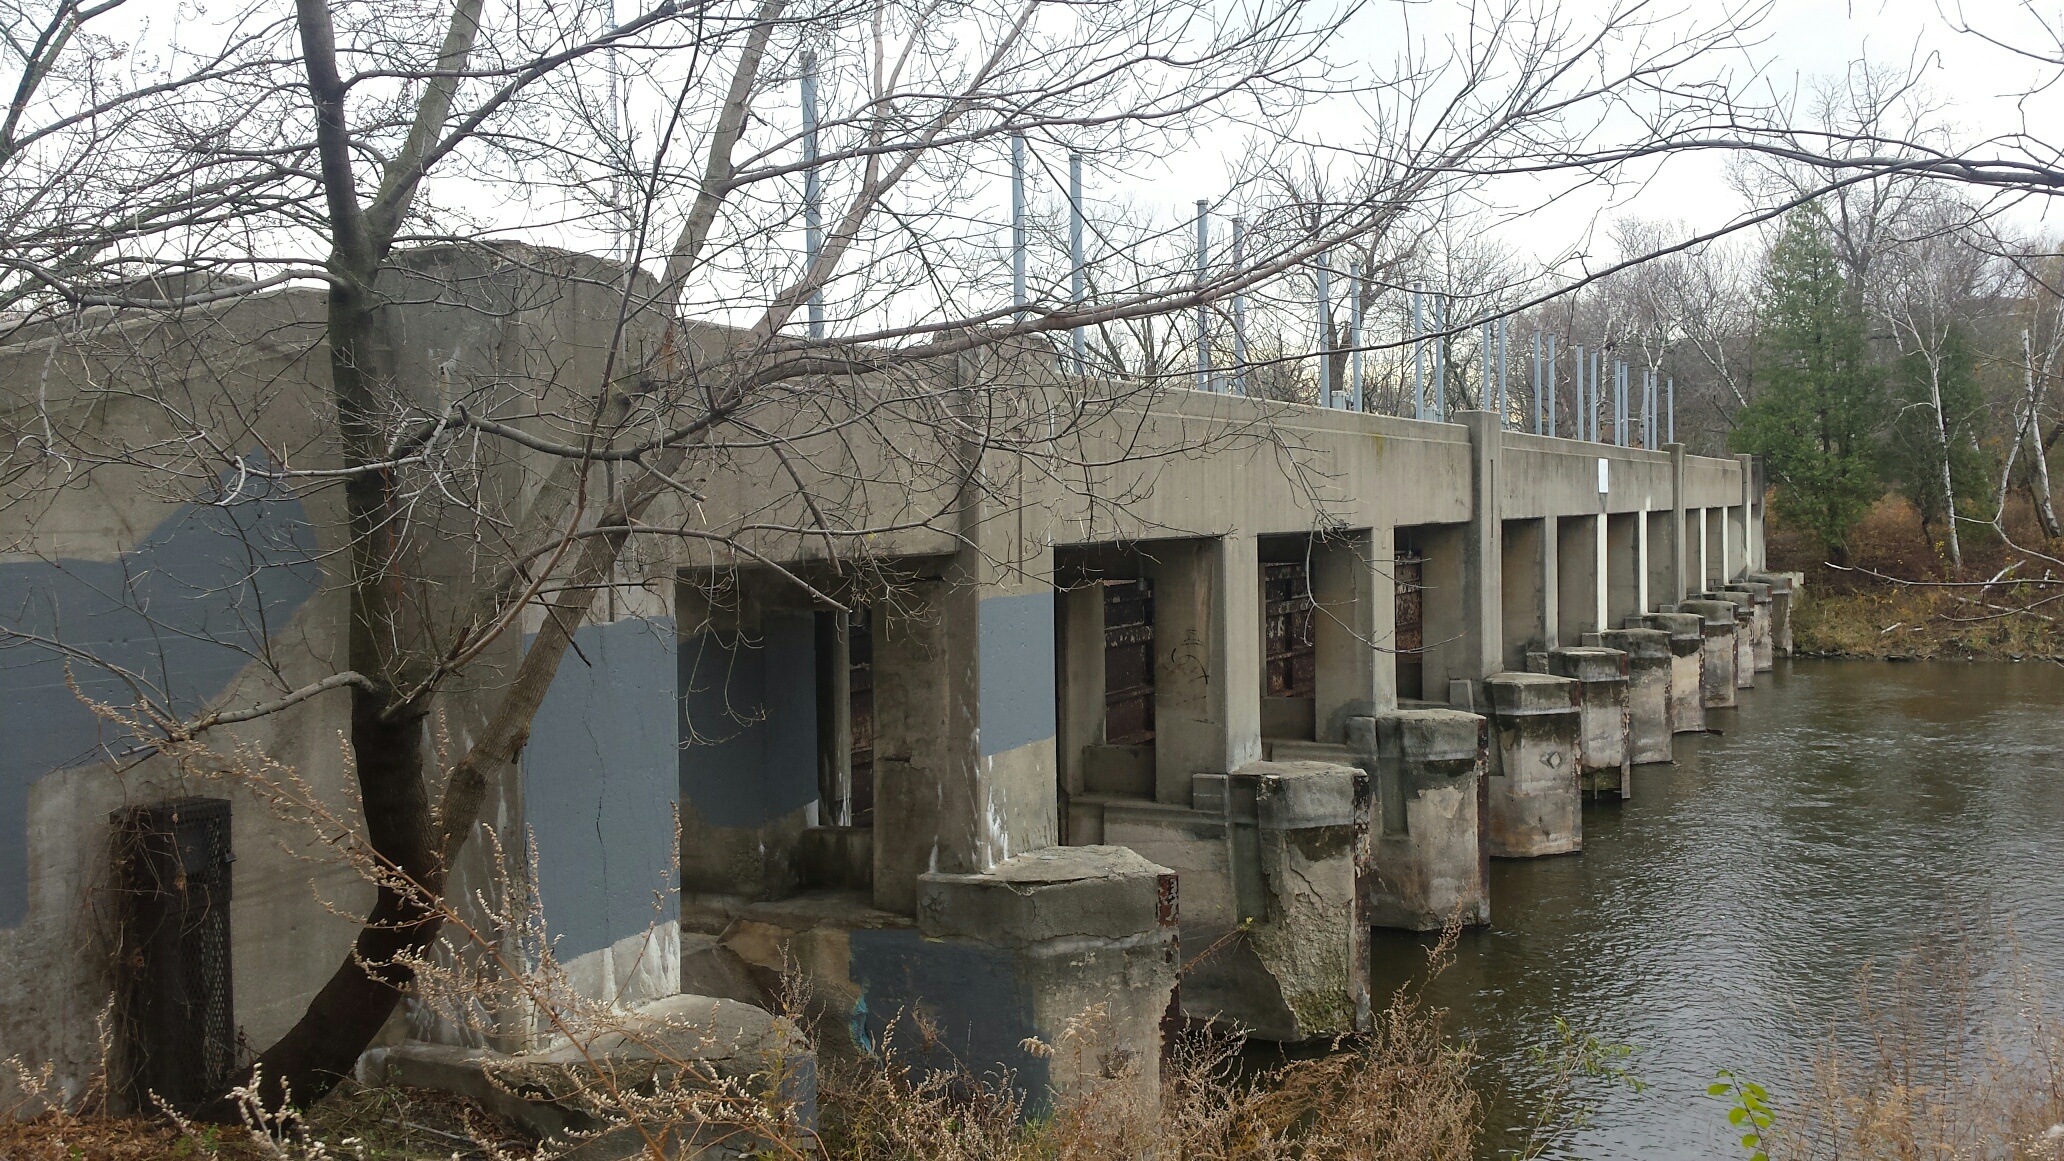 The Estabrook Dam